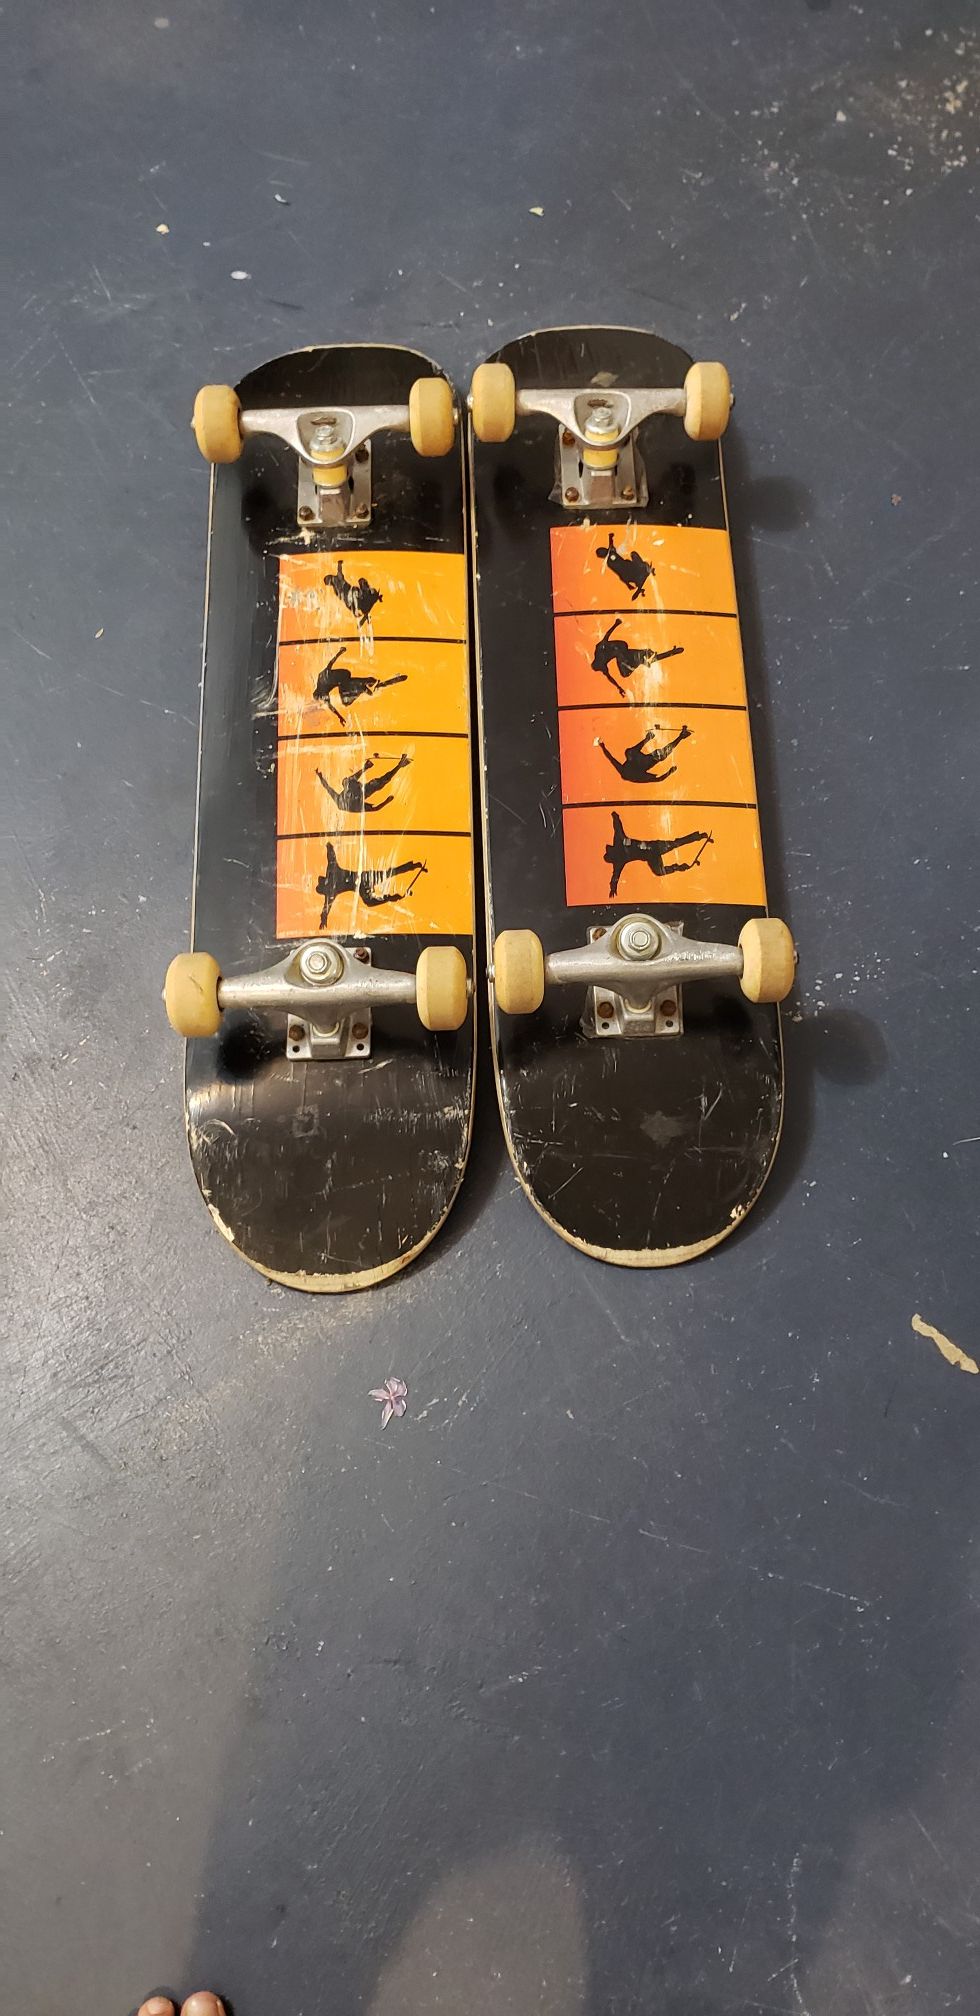 Two skate boards